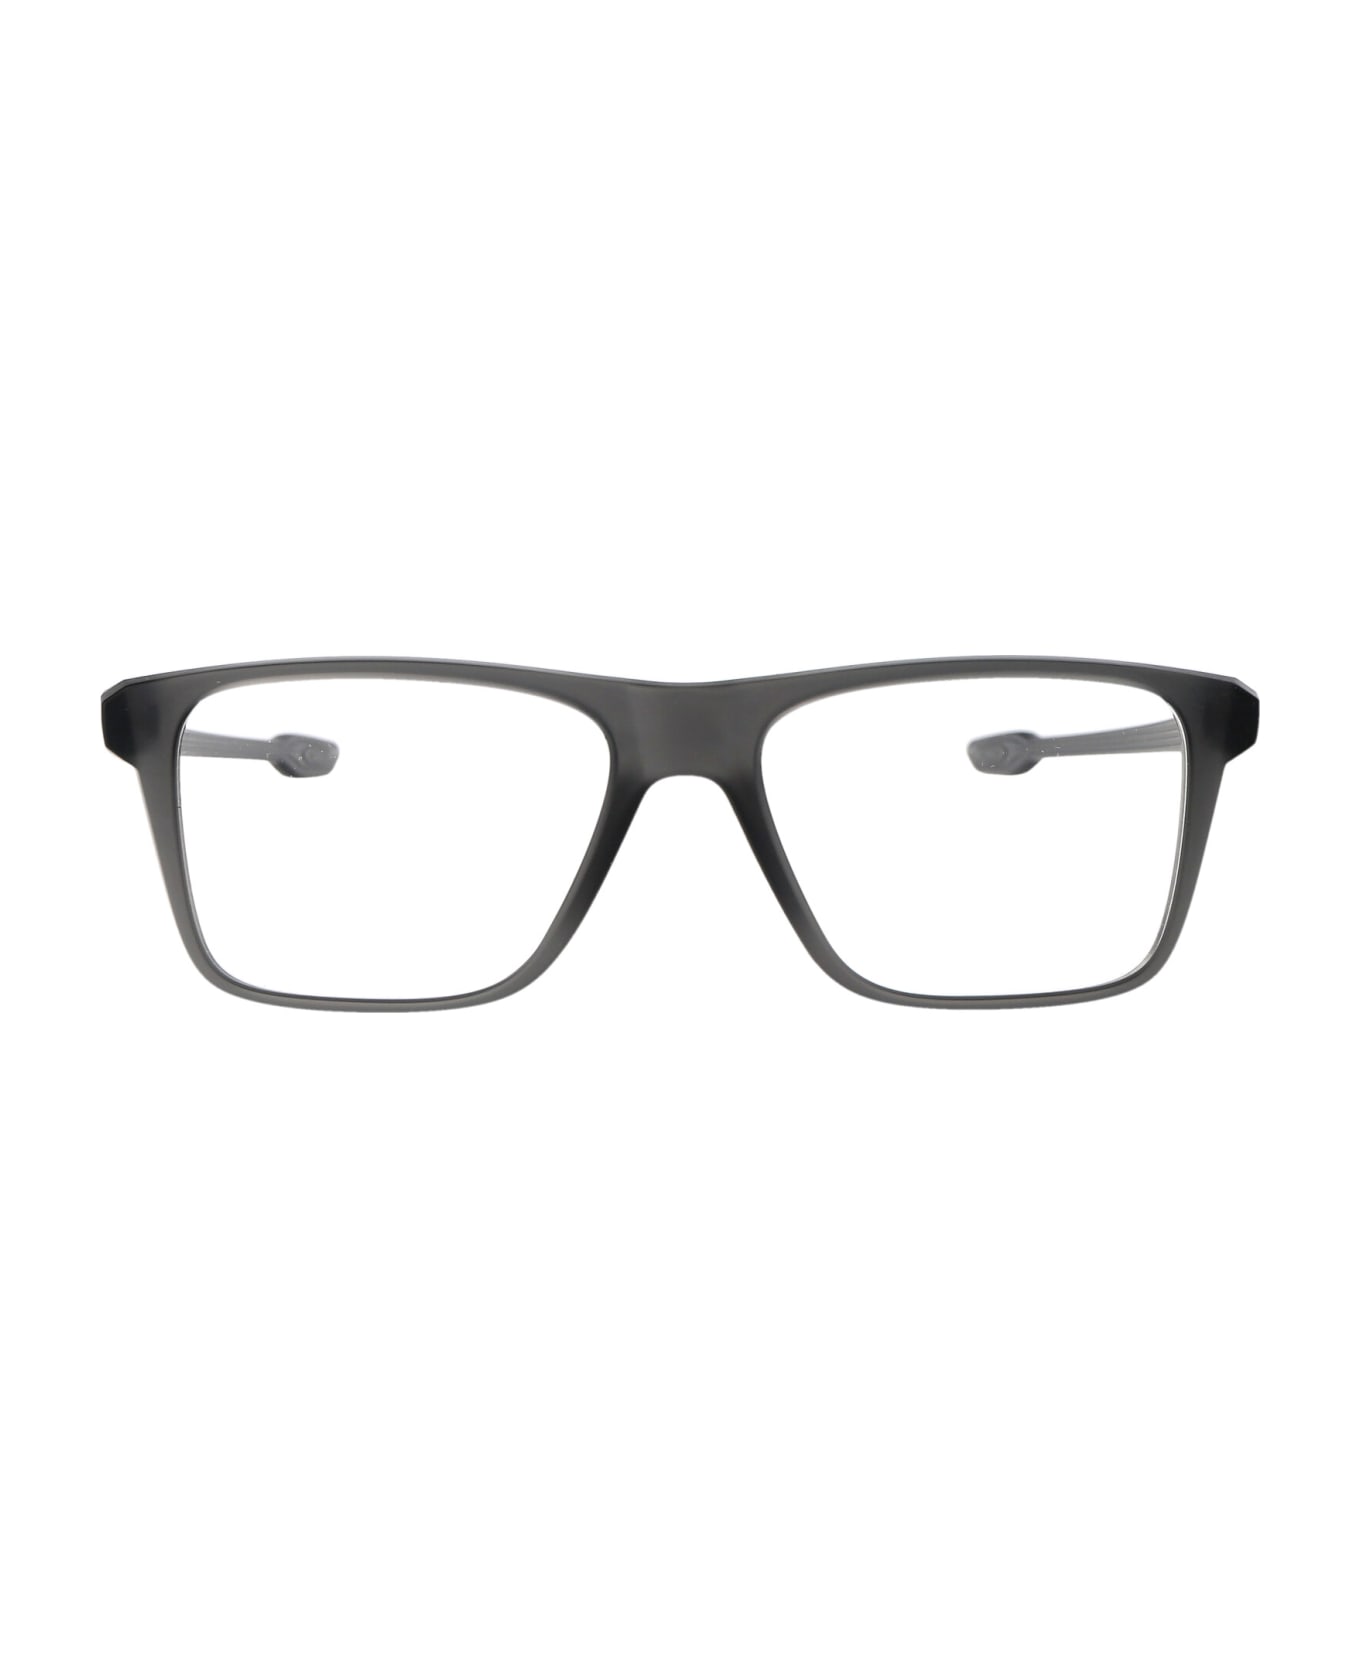 Oakley Bunt Glasses - 802602 SATIN GREY SMOKE DEMO LENS アイウェア